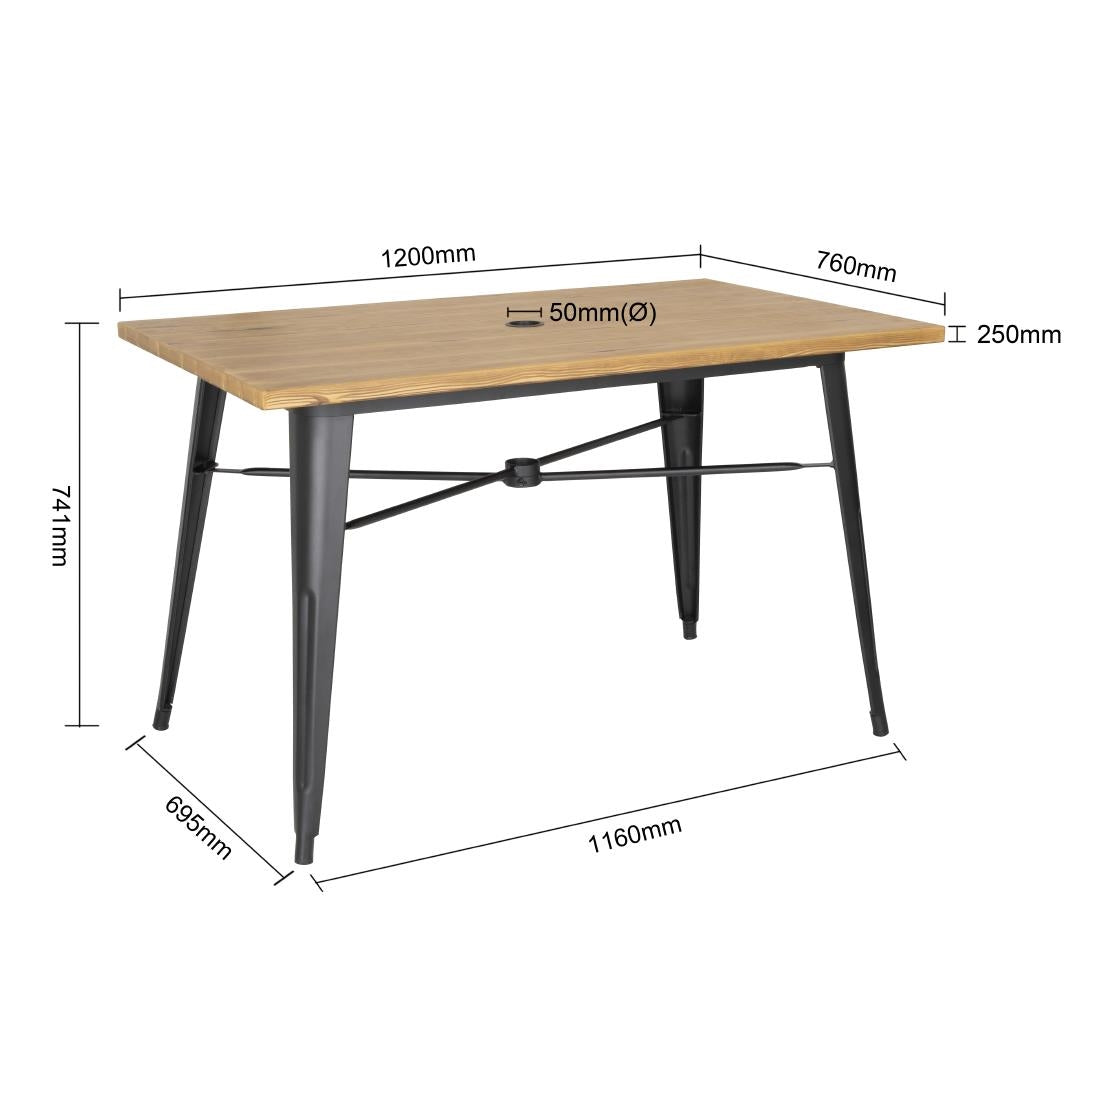 FT954 Bolero Complete Outdoor Table 120x76x76cm - Light Wood JD Catering Equipment Solutions Ltd